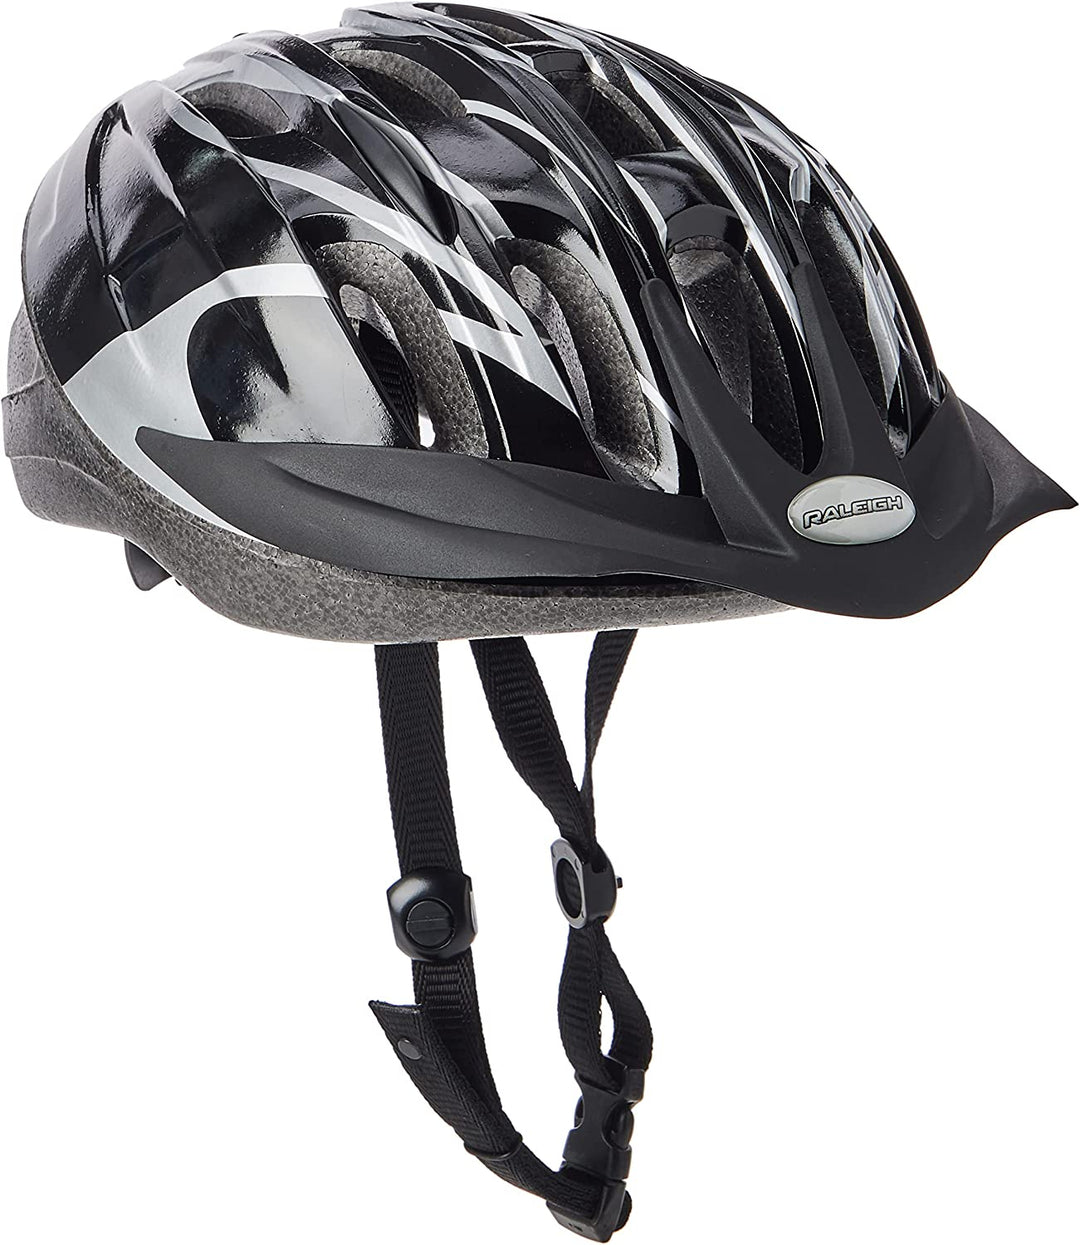 Raleigh Infusion Helmet